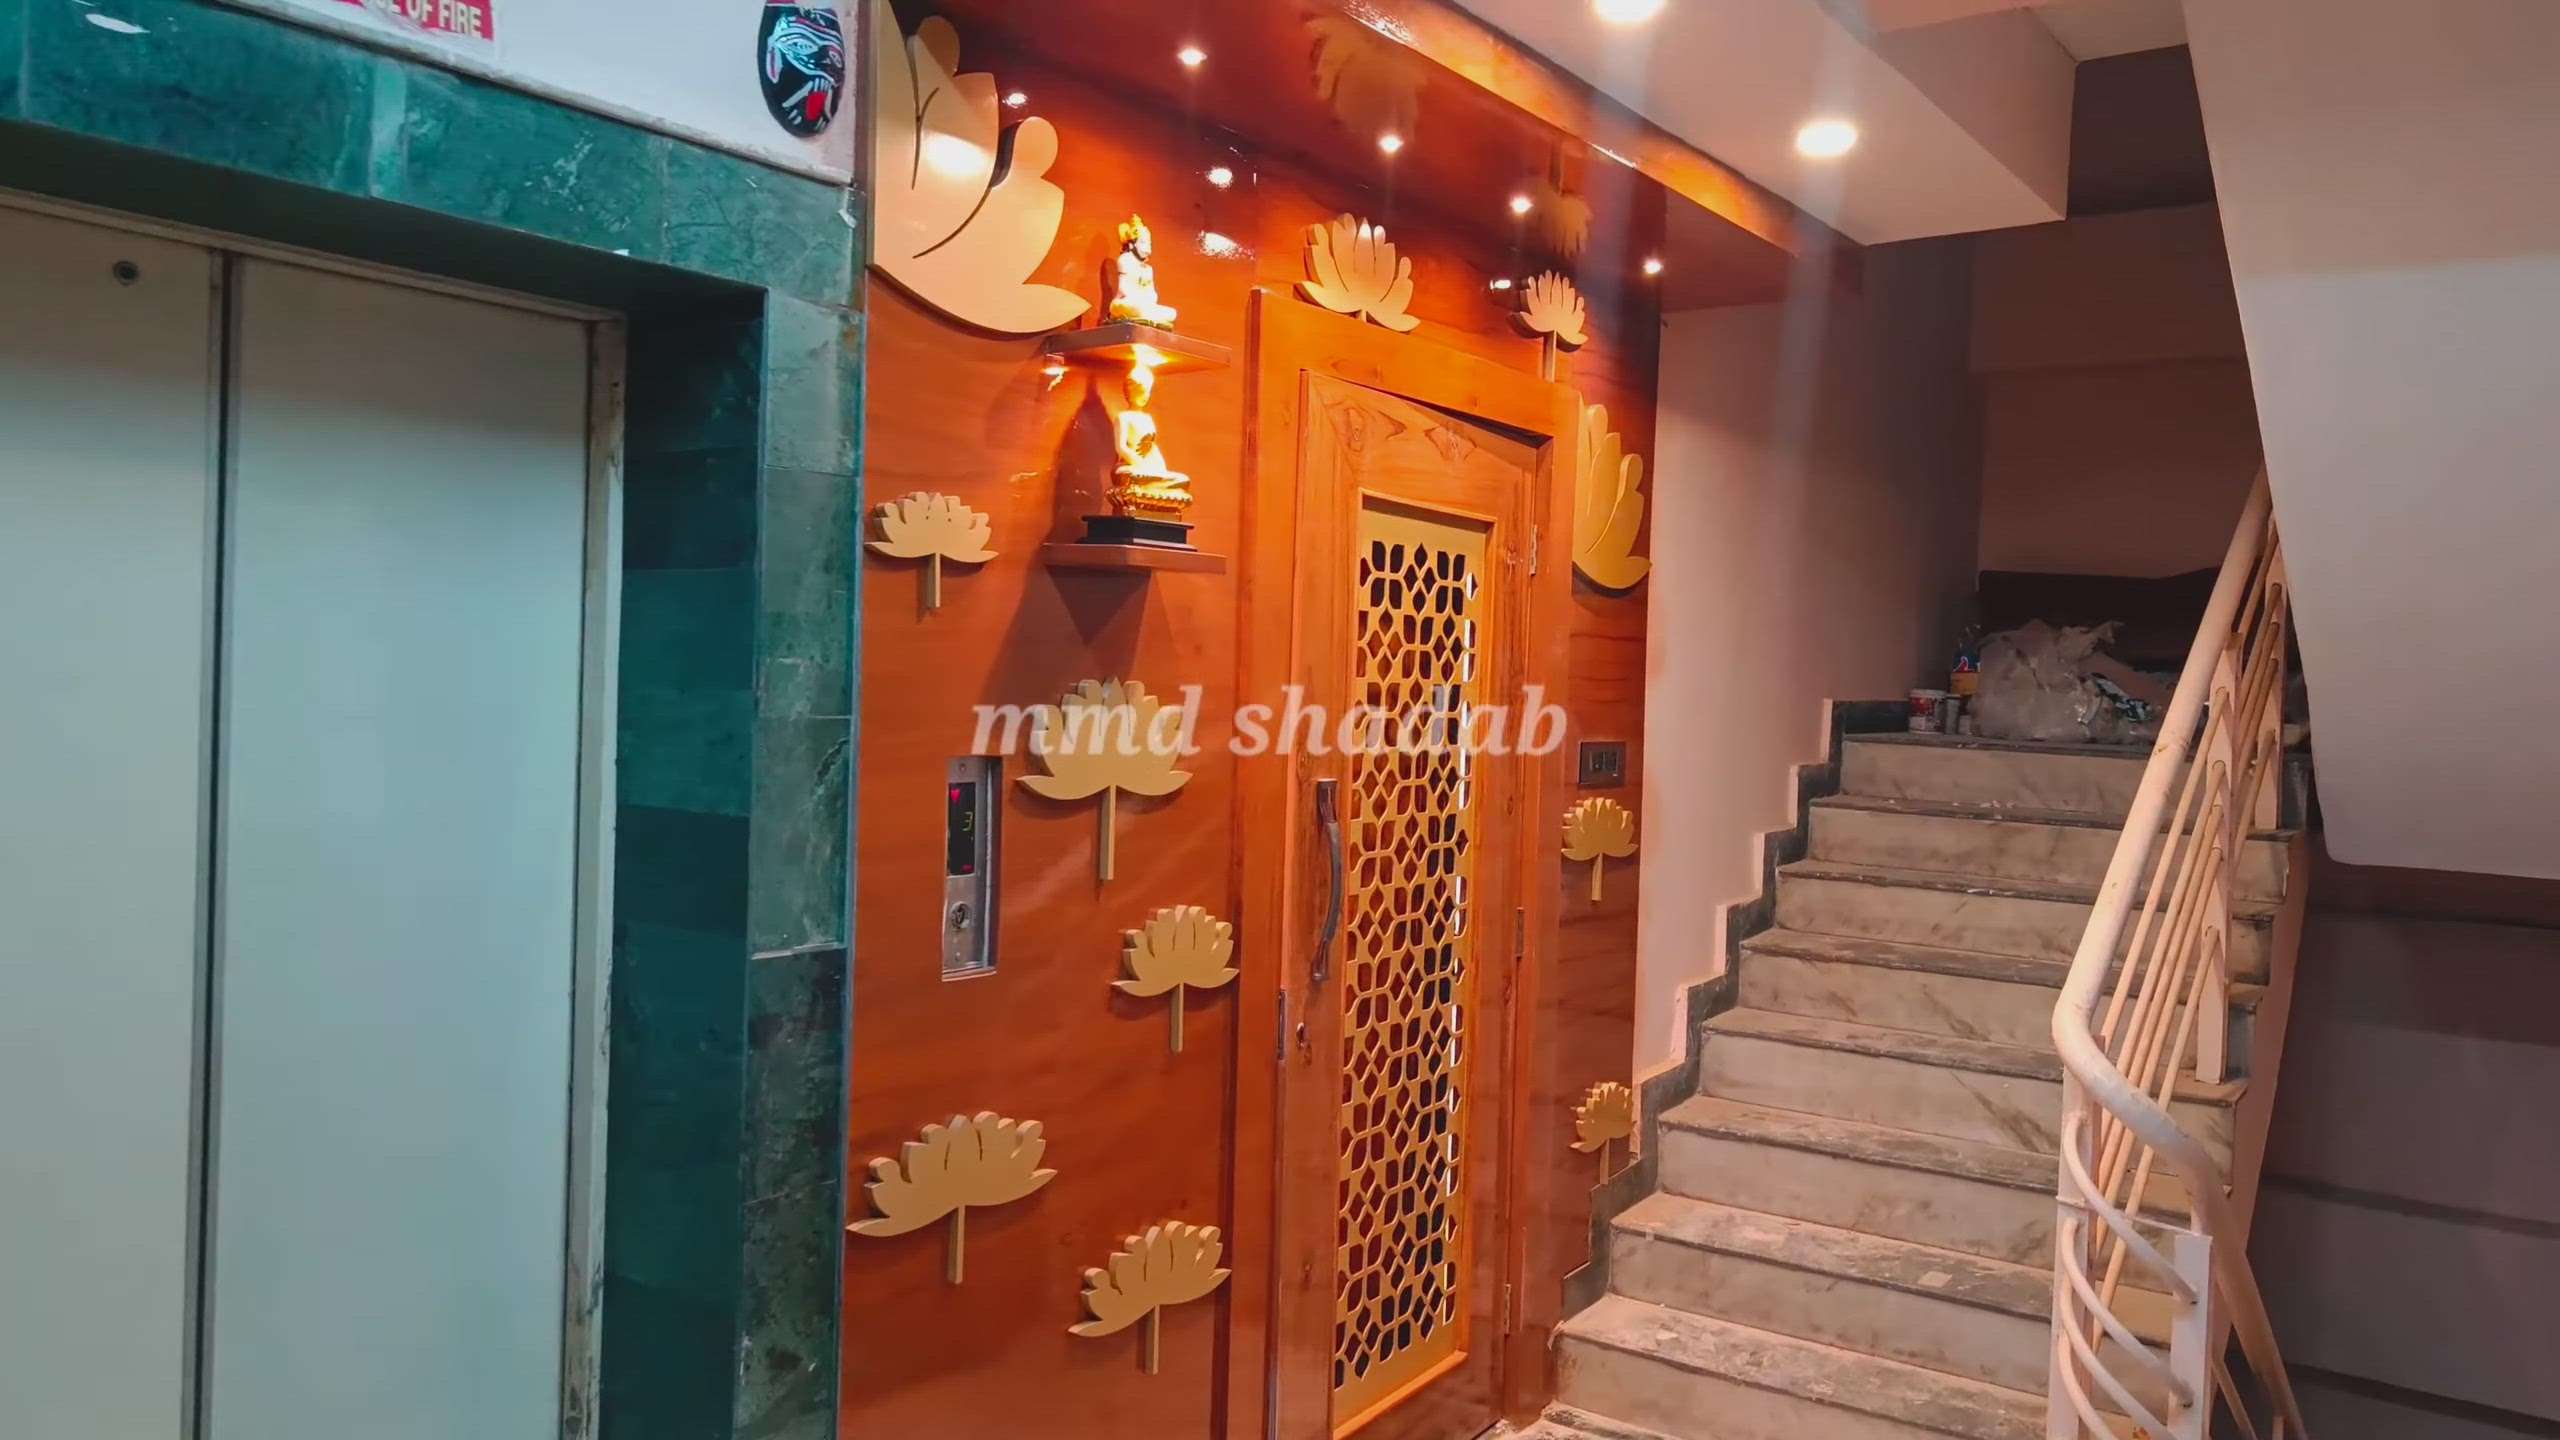 3bhk flat final look | interior design ideas for your home #mmdshadab #koloapp #koloviral